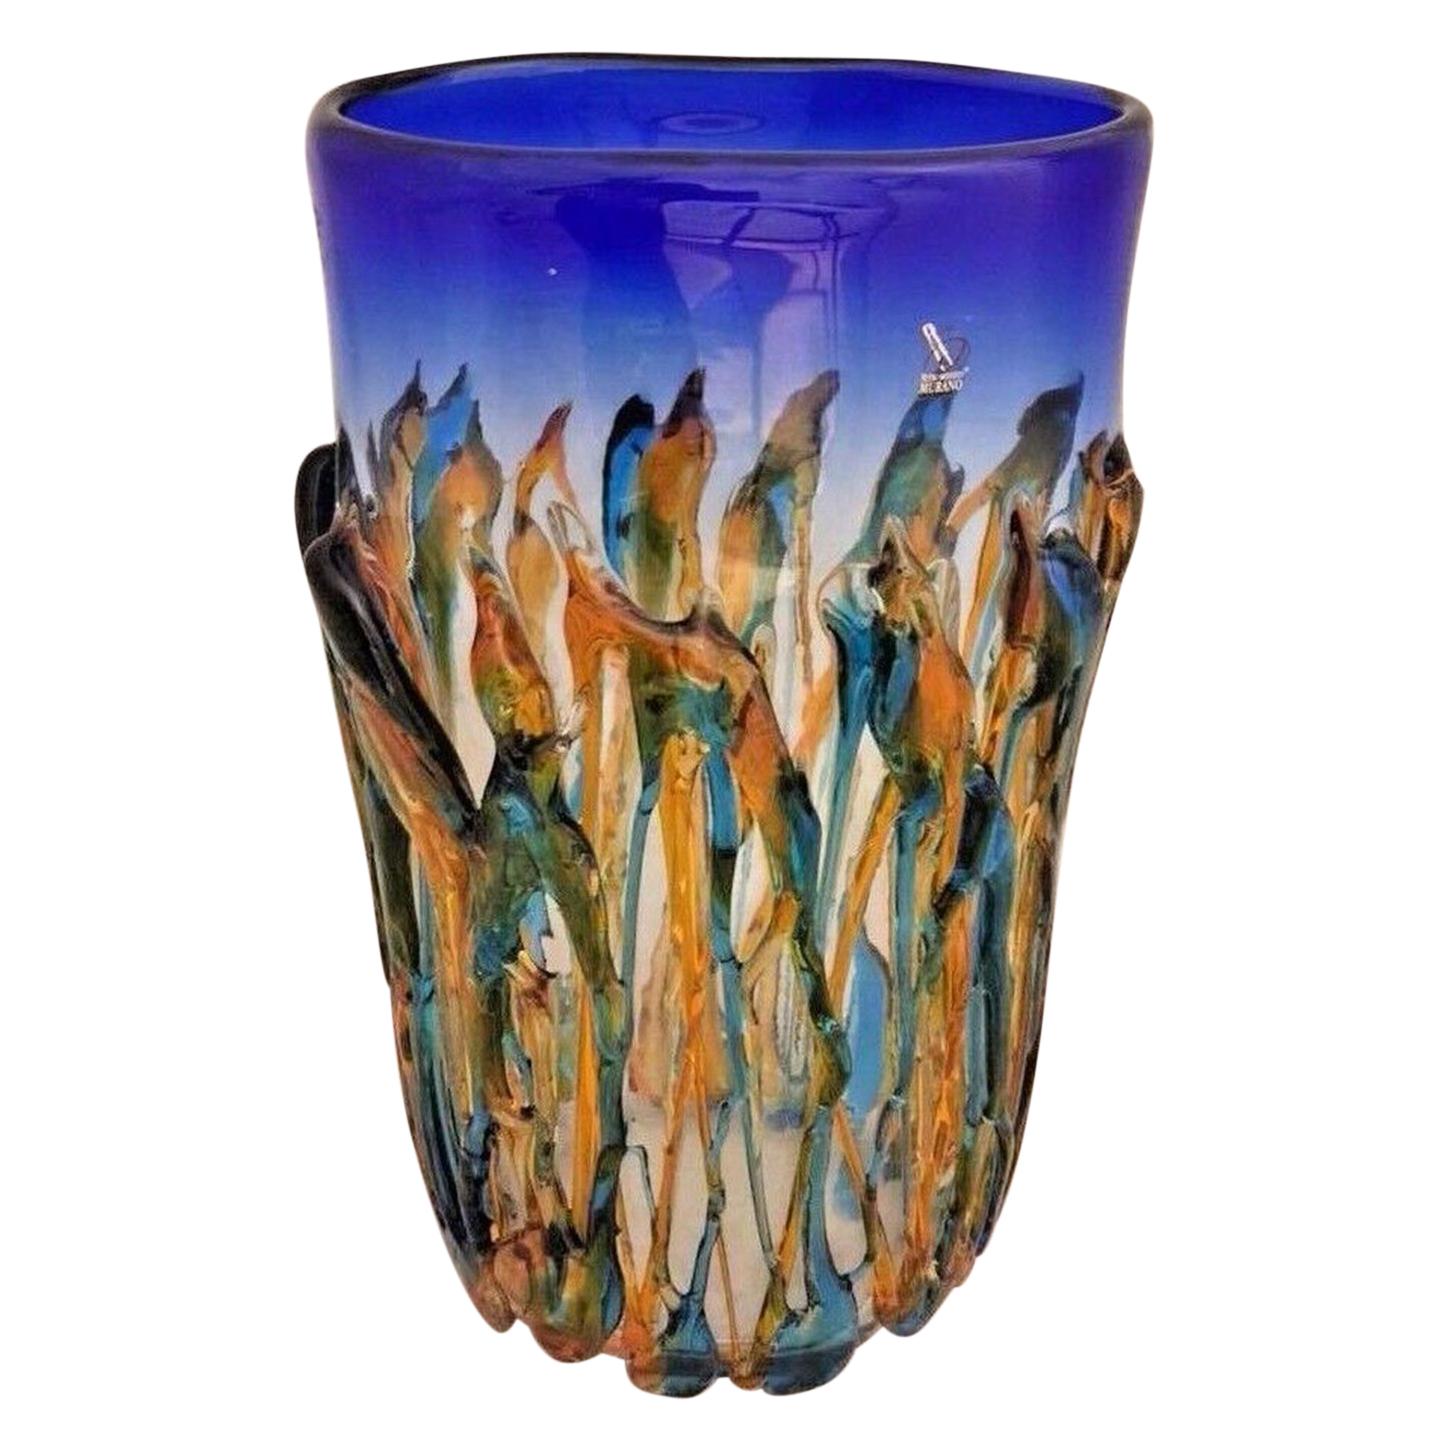 Große abstrakte mehrfarbige Murano-Kunstglasvase Oceanos aus Muranoglas, signiert Vetro Artistico, signiert